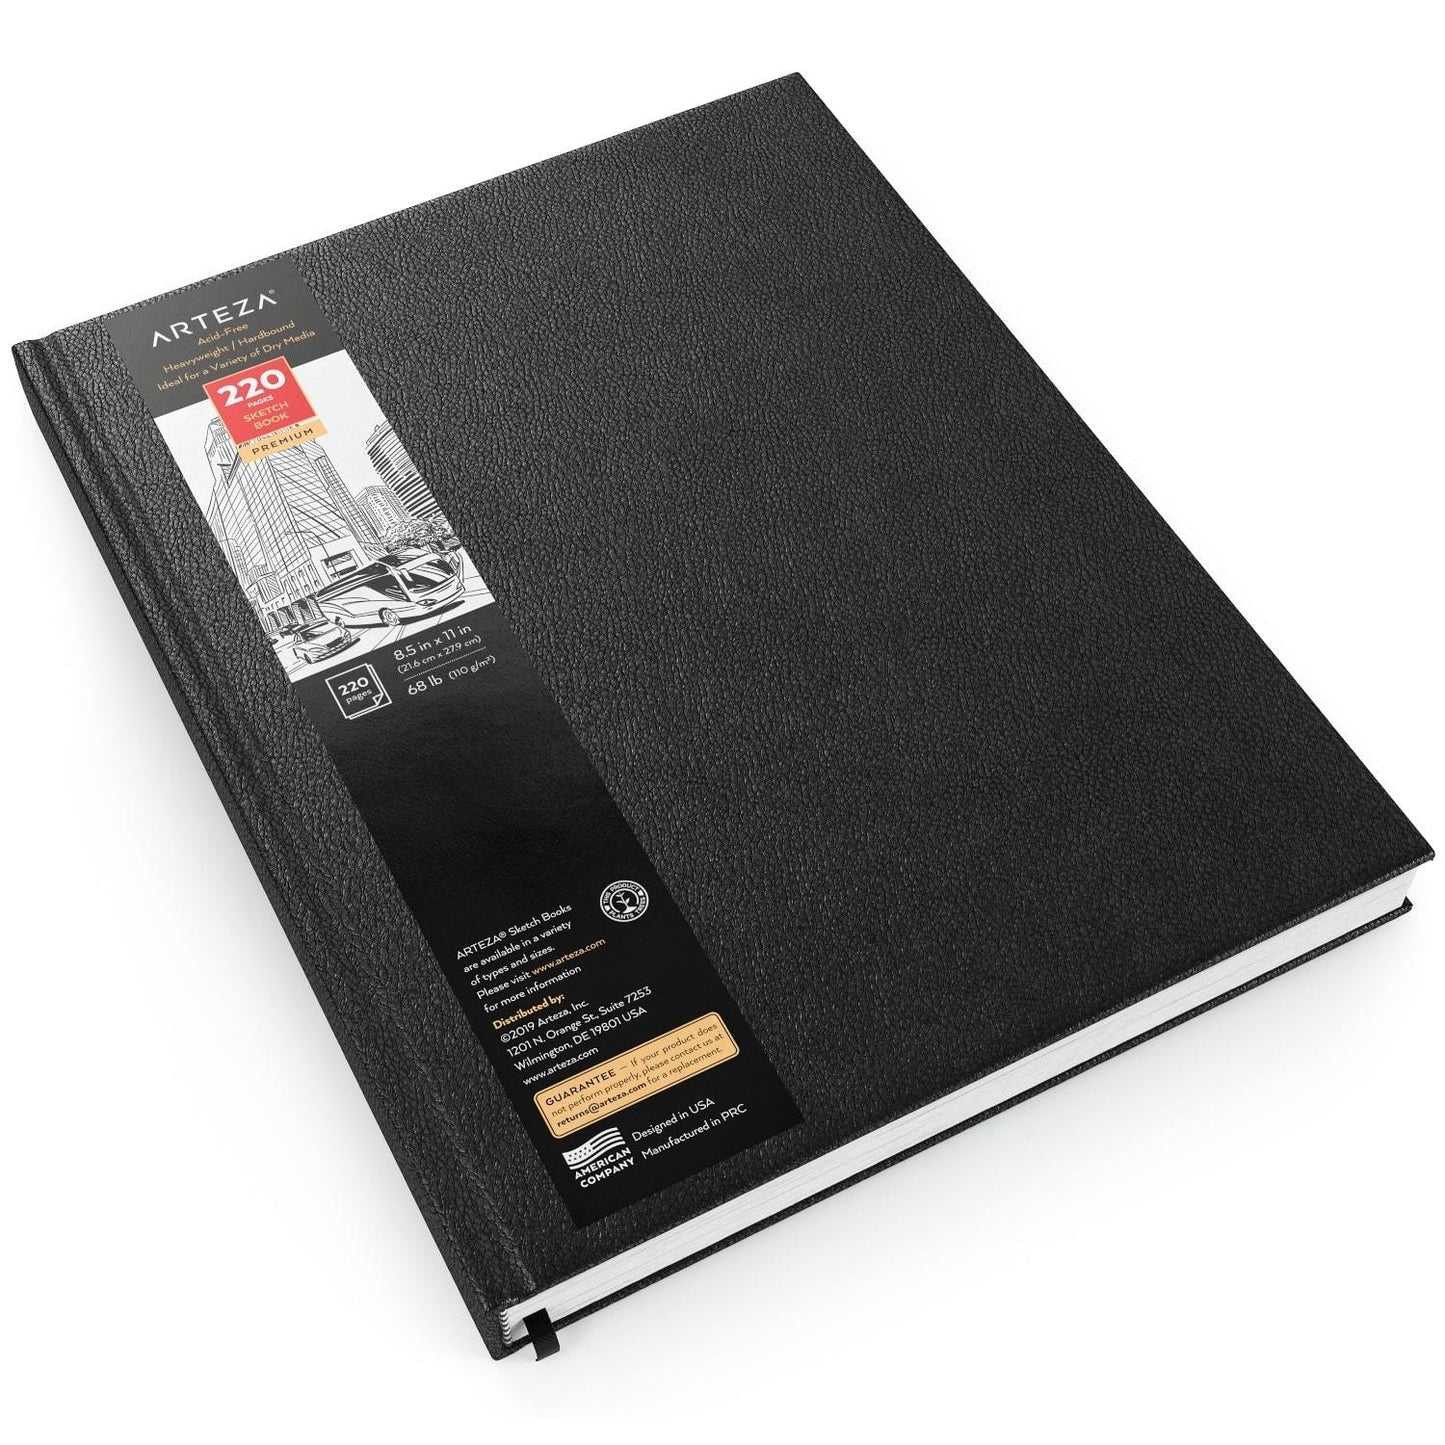 Arteza 8.5x11 Hardbound Sketchbook, Set of 2 Heavyweight Hard Cover Sketch  110